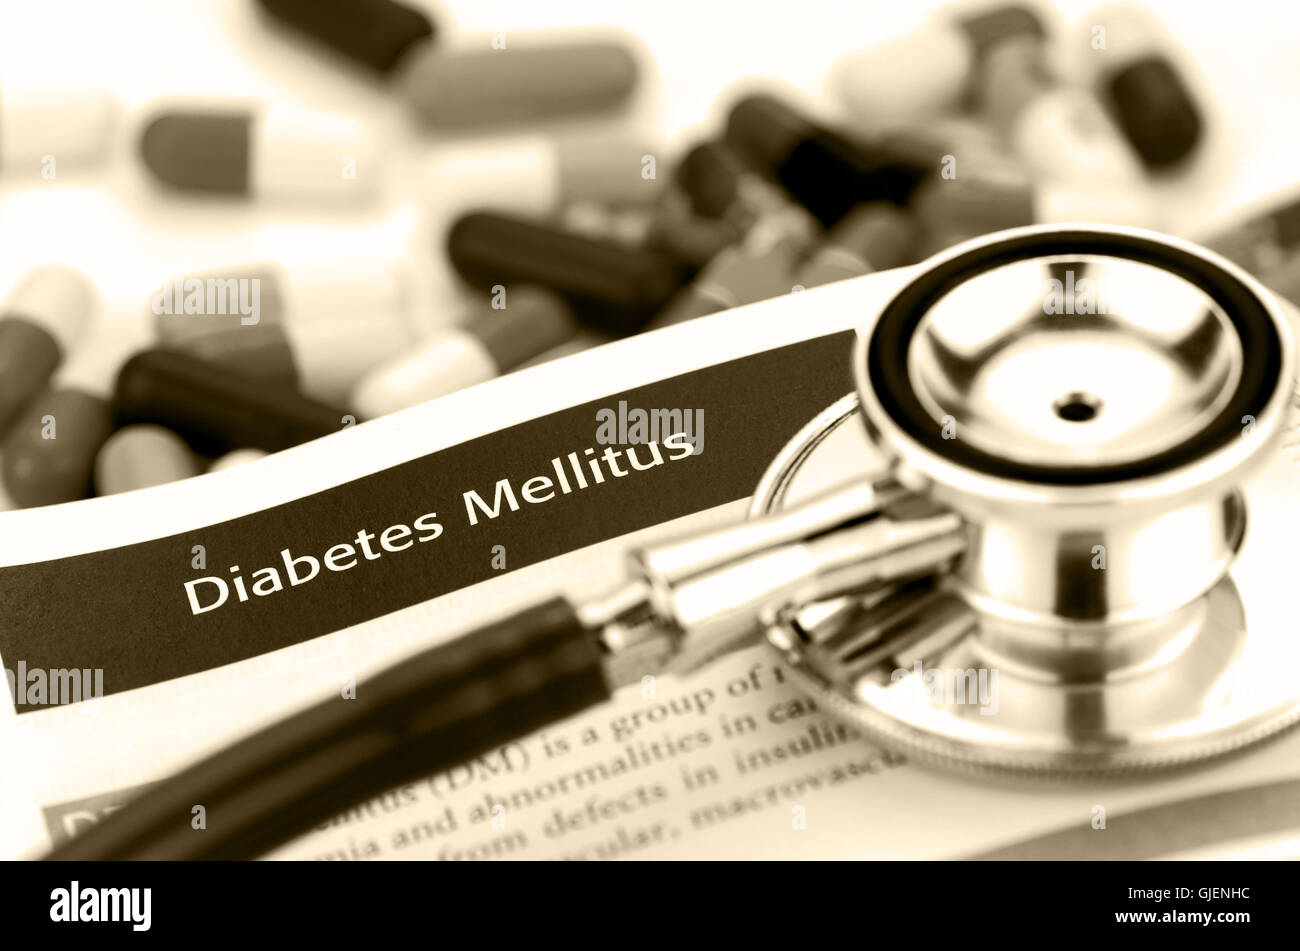 Diabetes-Diagnose und Behandlung. Welt-Diabetes-Tag ist am 14. November. Stockfoto